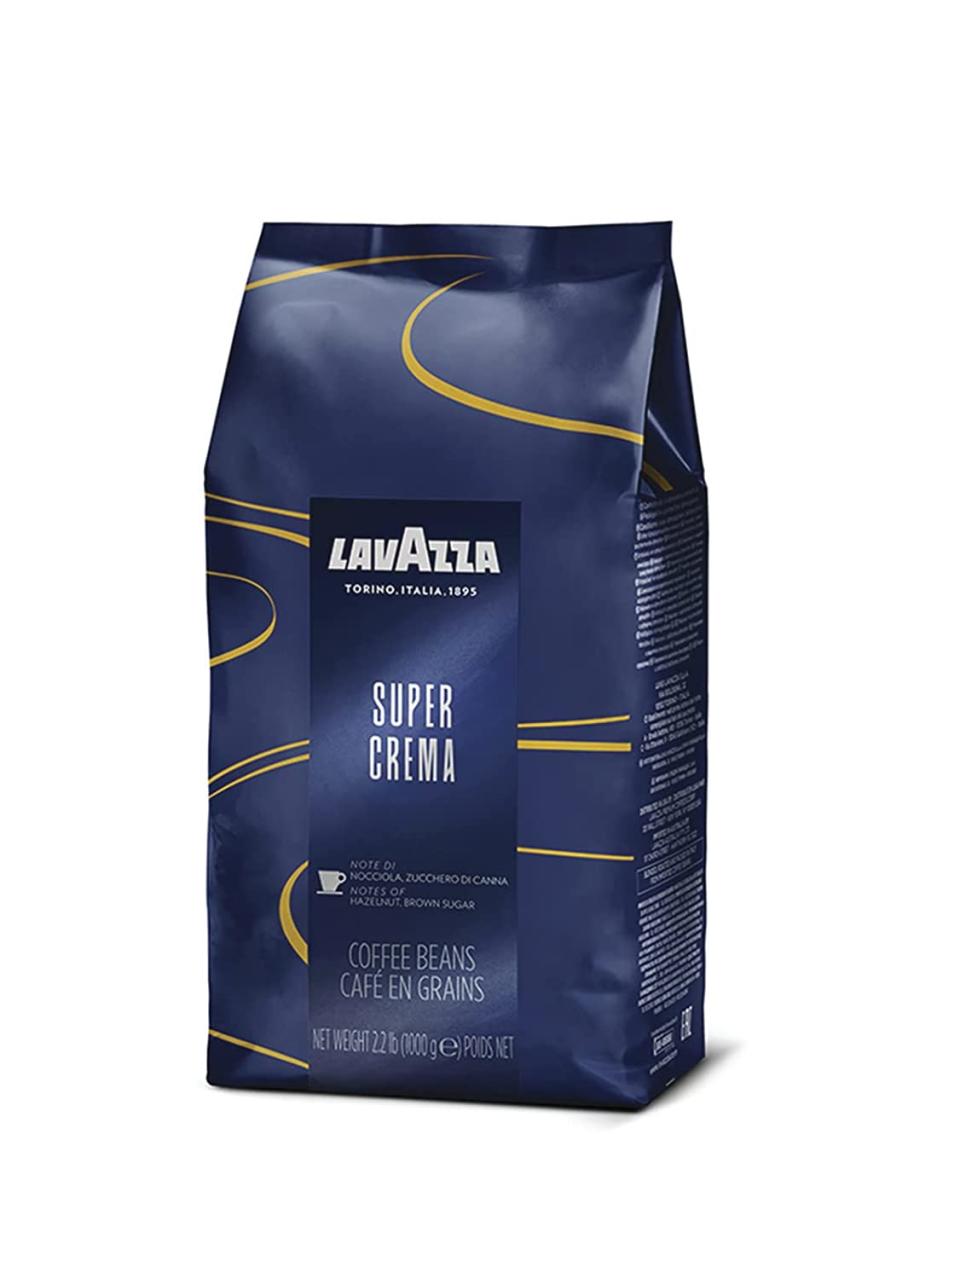 Lavazza coffee beans, best coffee on Amazon